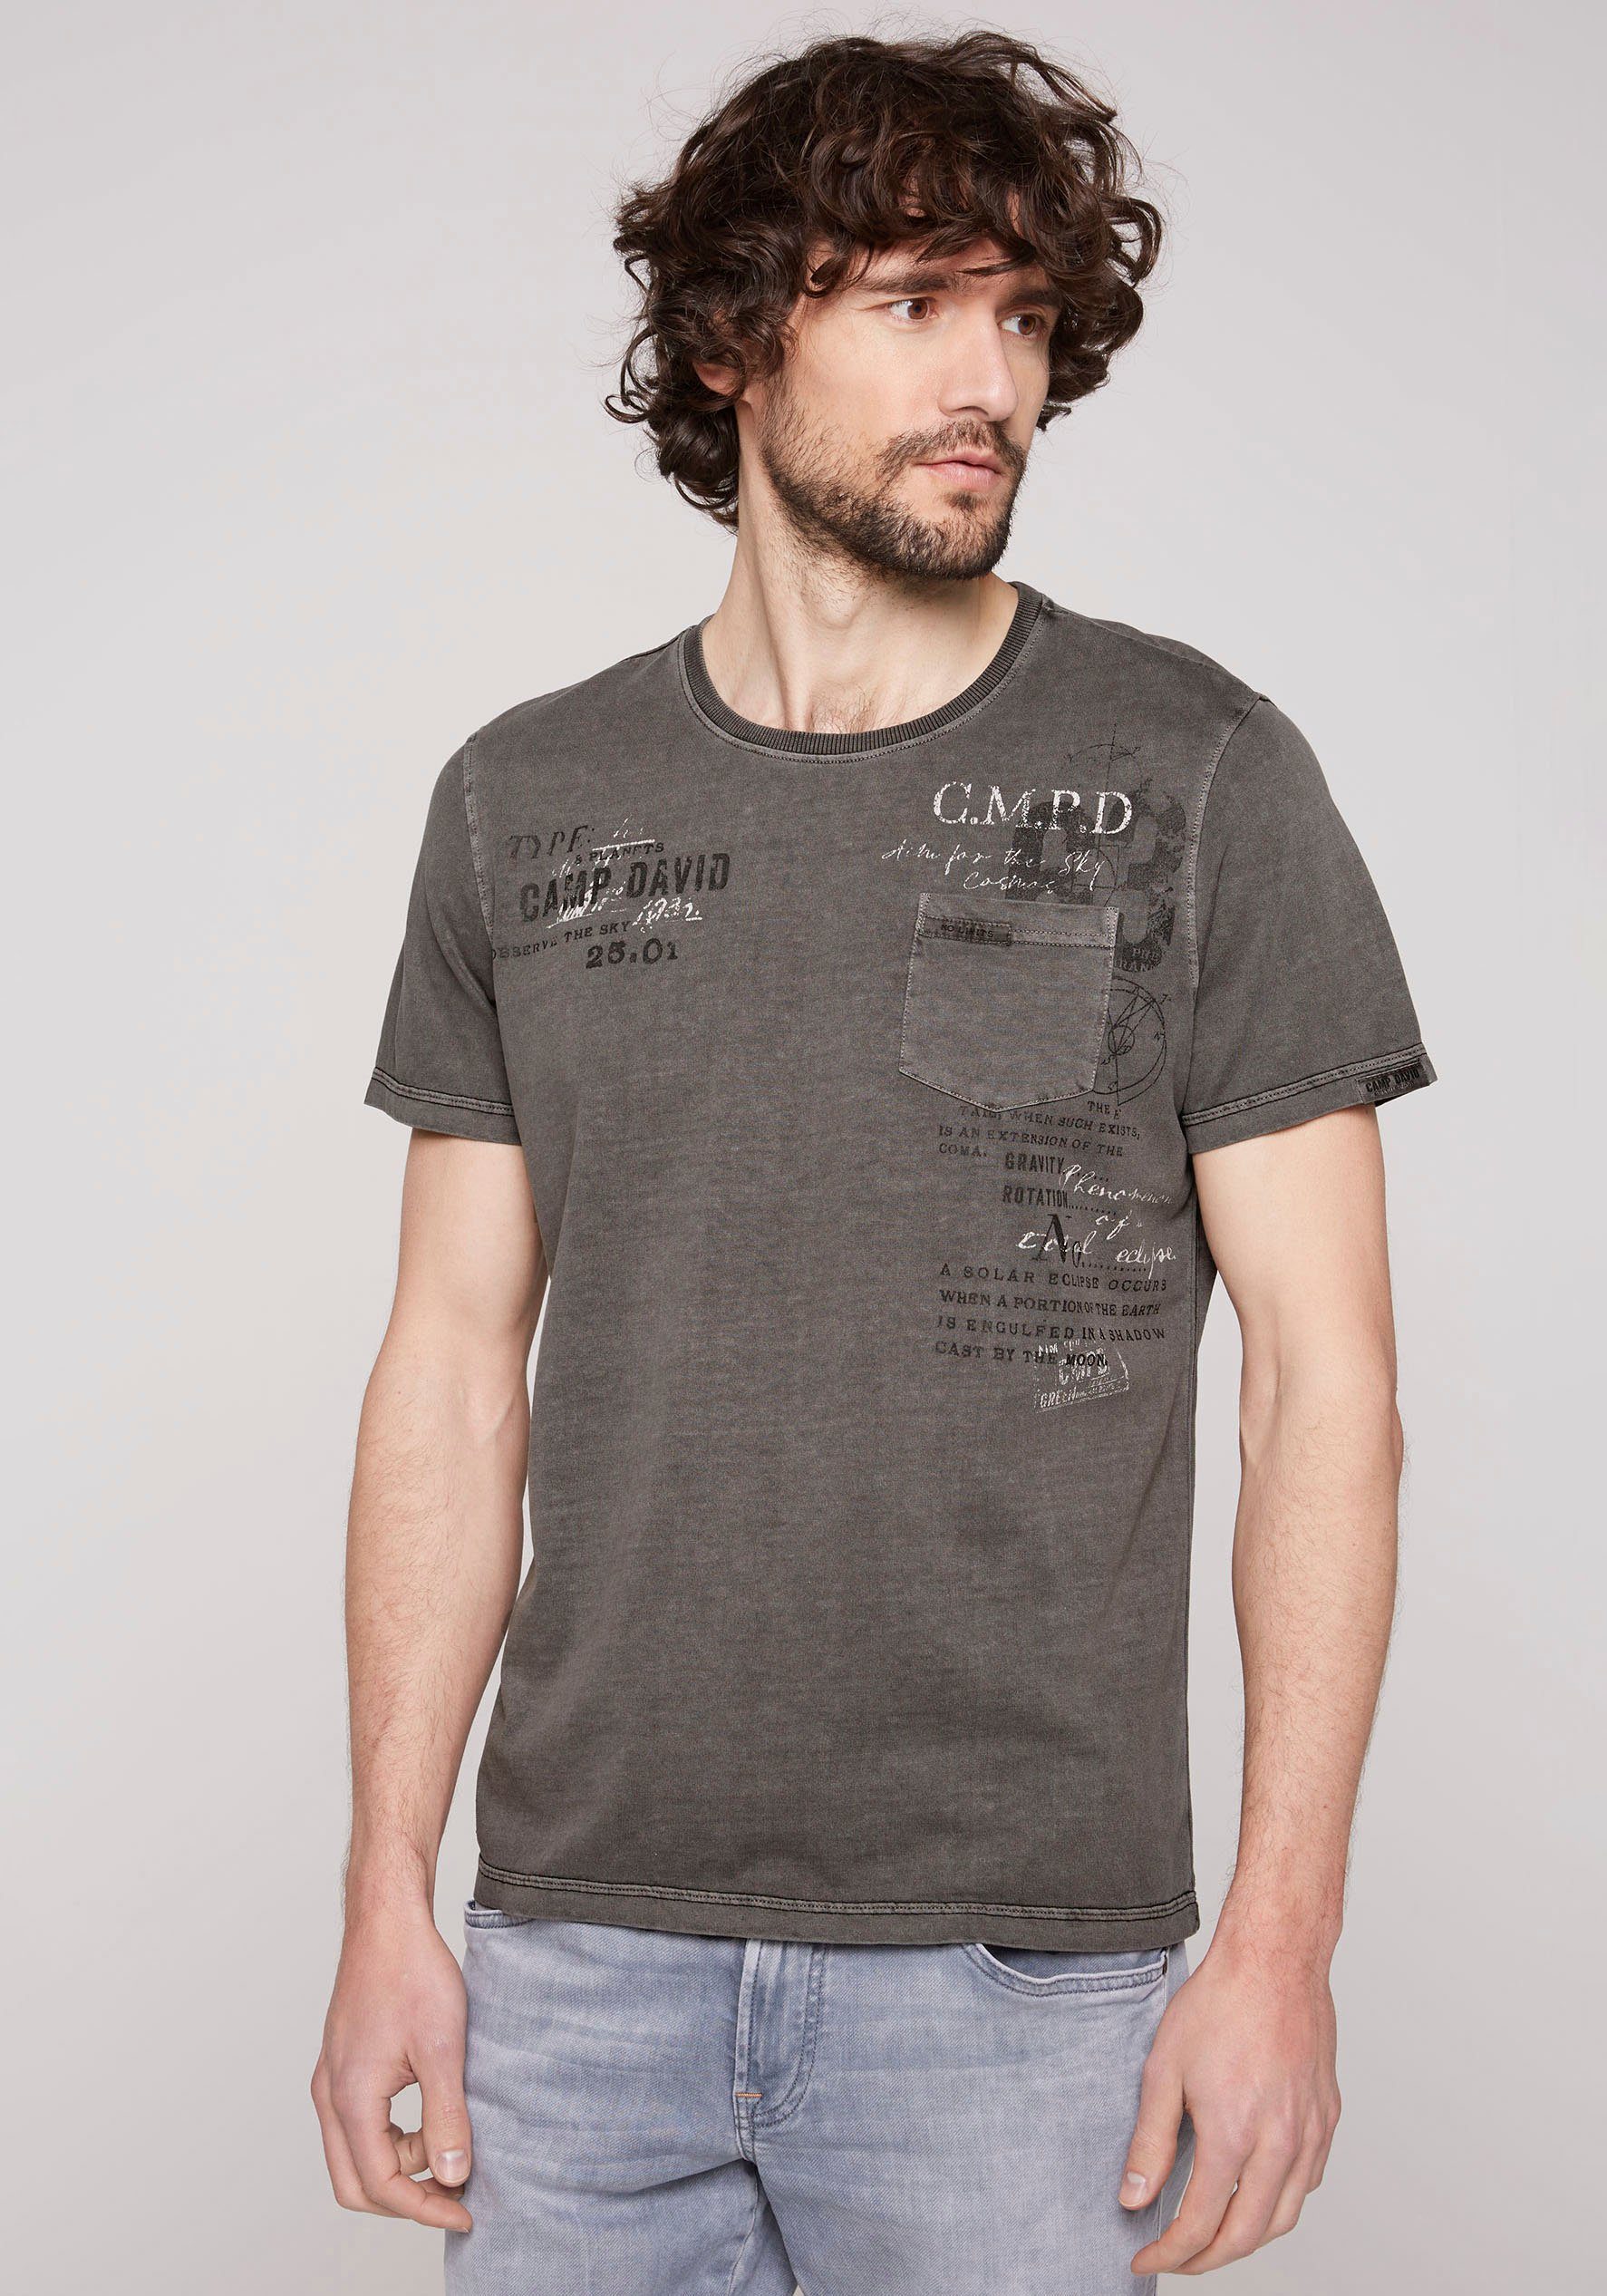 CAMP DAVID T-Shirt mit Kontrastnähten mud | T-Shirts